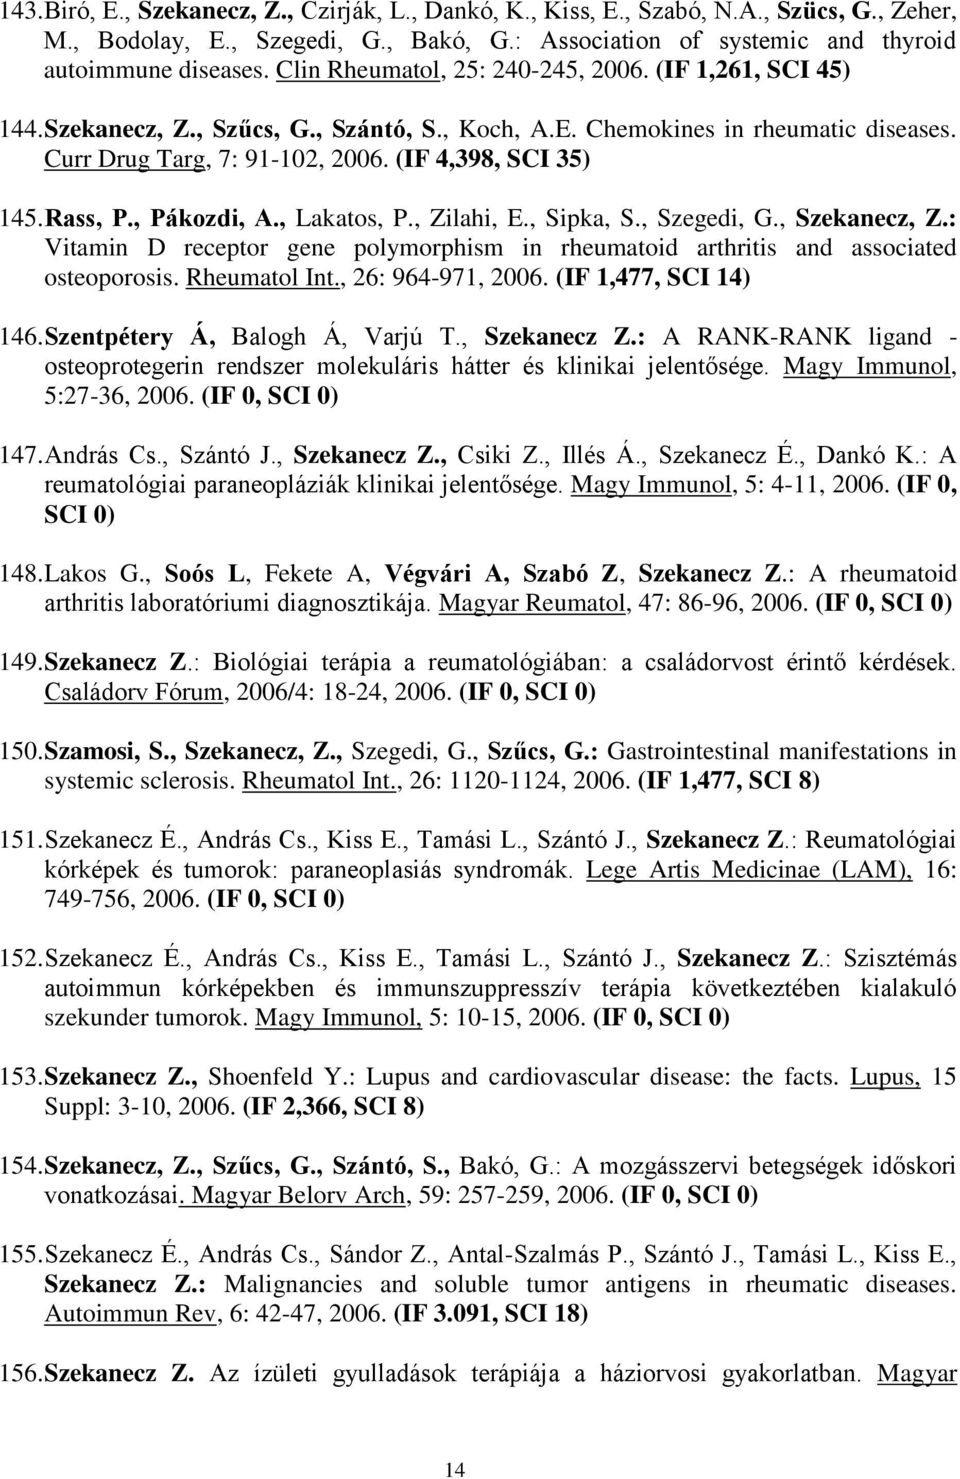 Rass, P., Pákozdi, A., Lakatos, P., Zilahi, E., Sipka, S., Szegedi, G., Szekanecz, Z.: Vitamin D receptor gene polymorphism in rheumatoid arthritis and associated osteoporosis. Rheumatol Int.